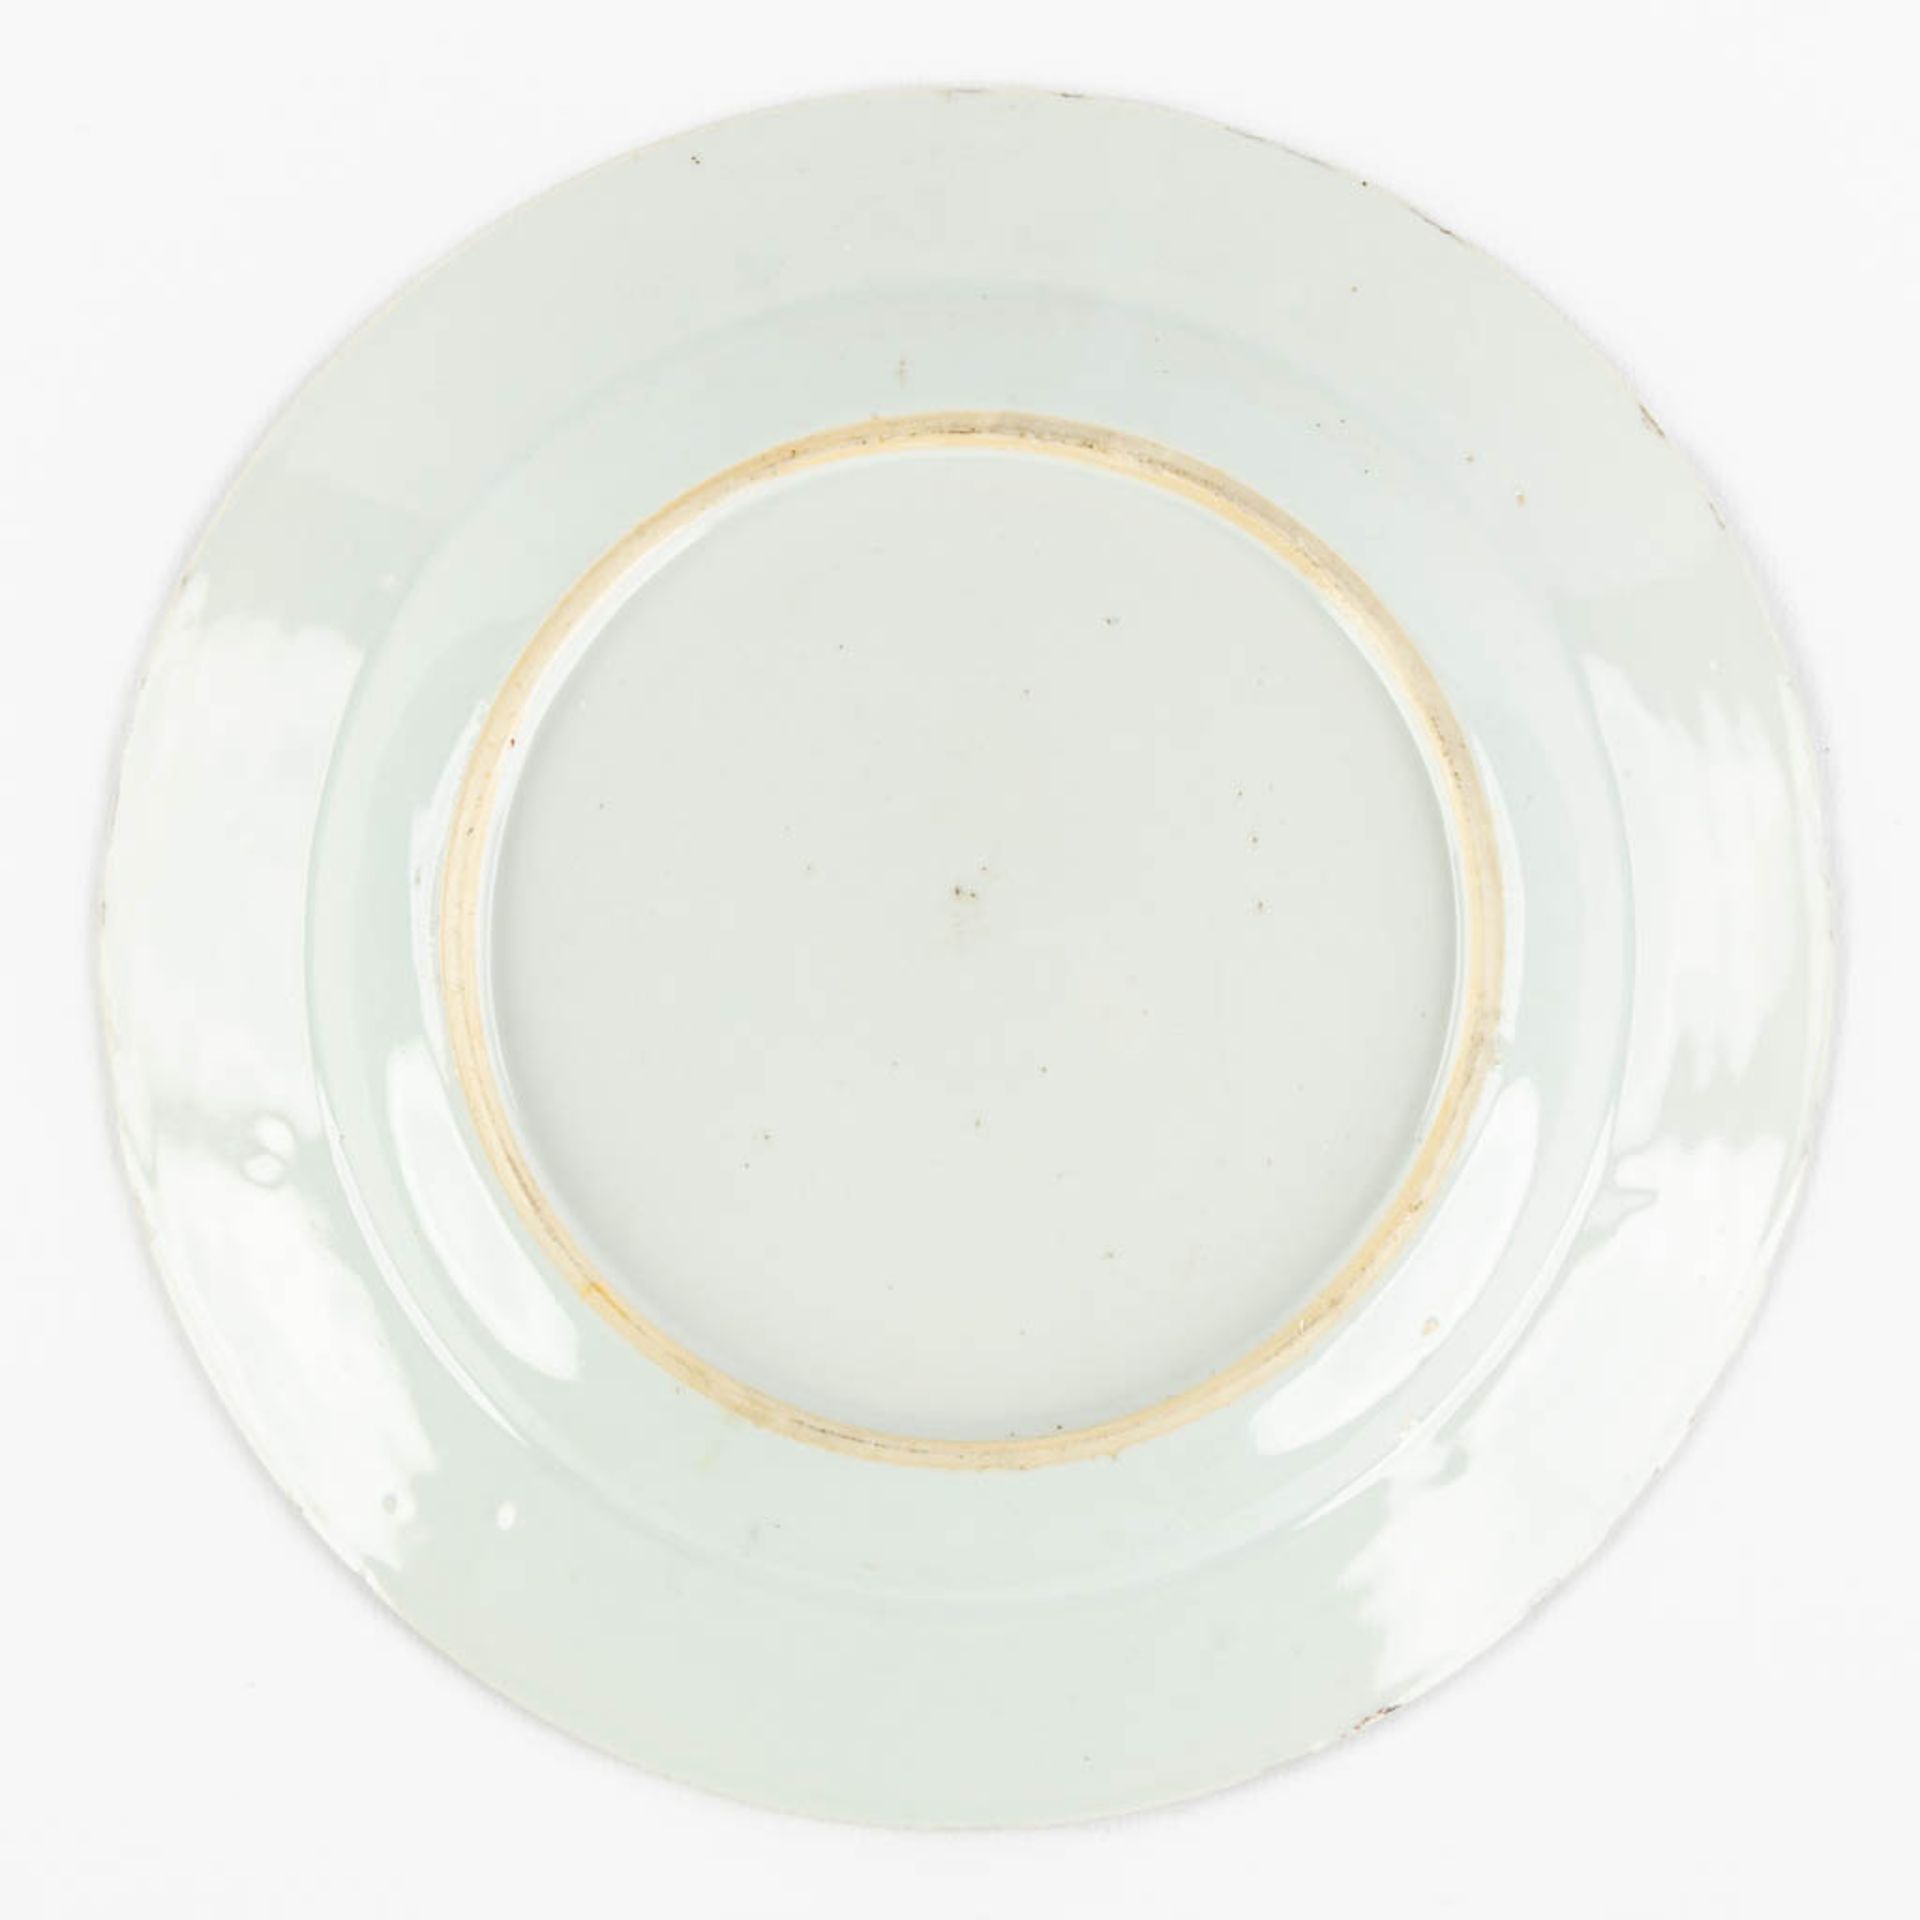 Six pieces of Japanese Imari porcelain, 19th/20th C. (D:23 cm) - Image 8 of 16